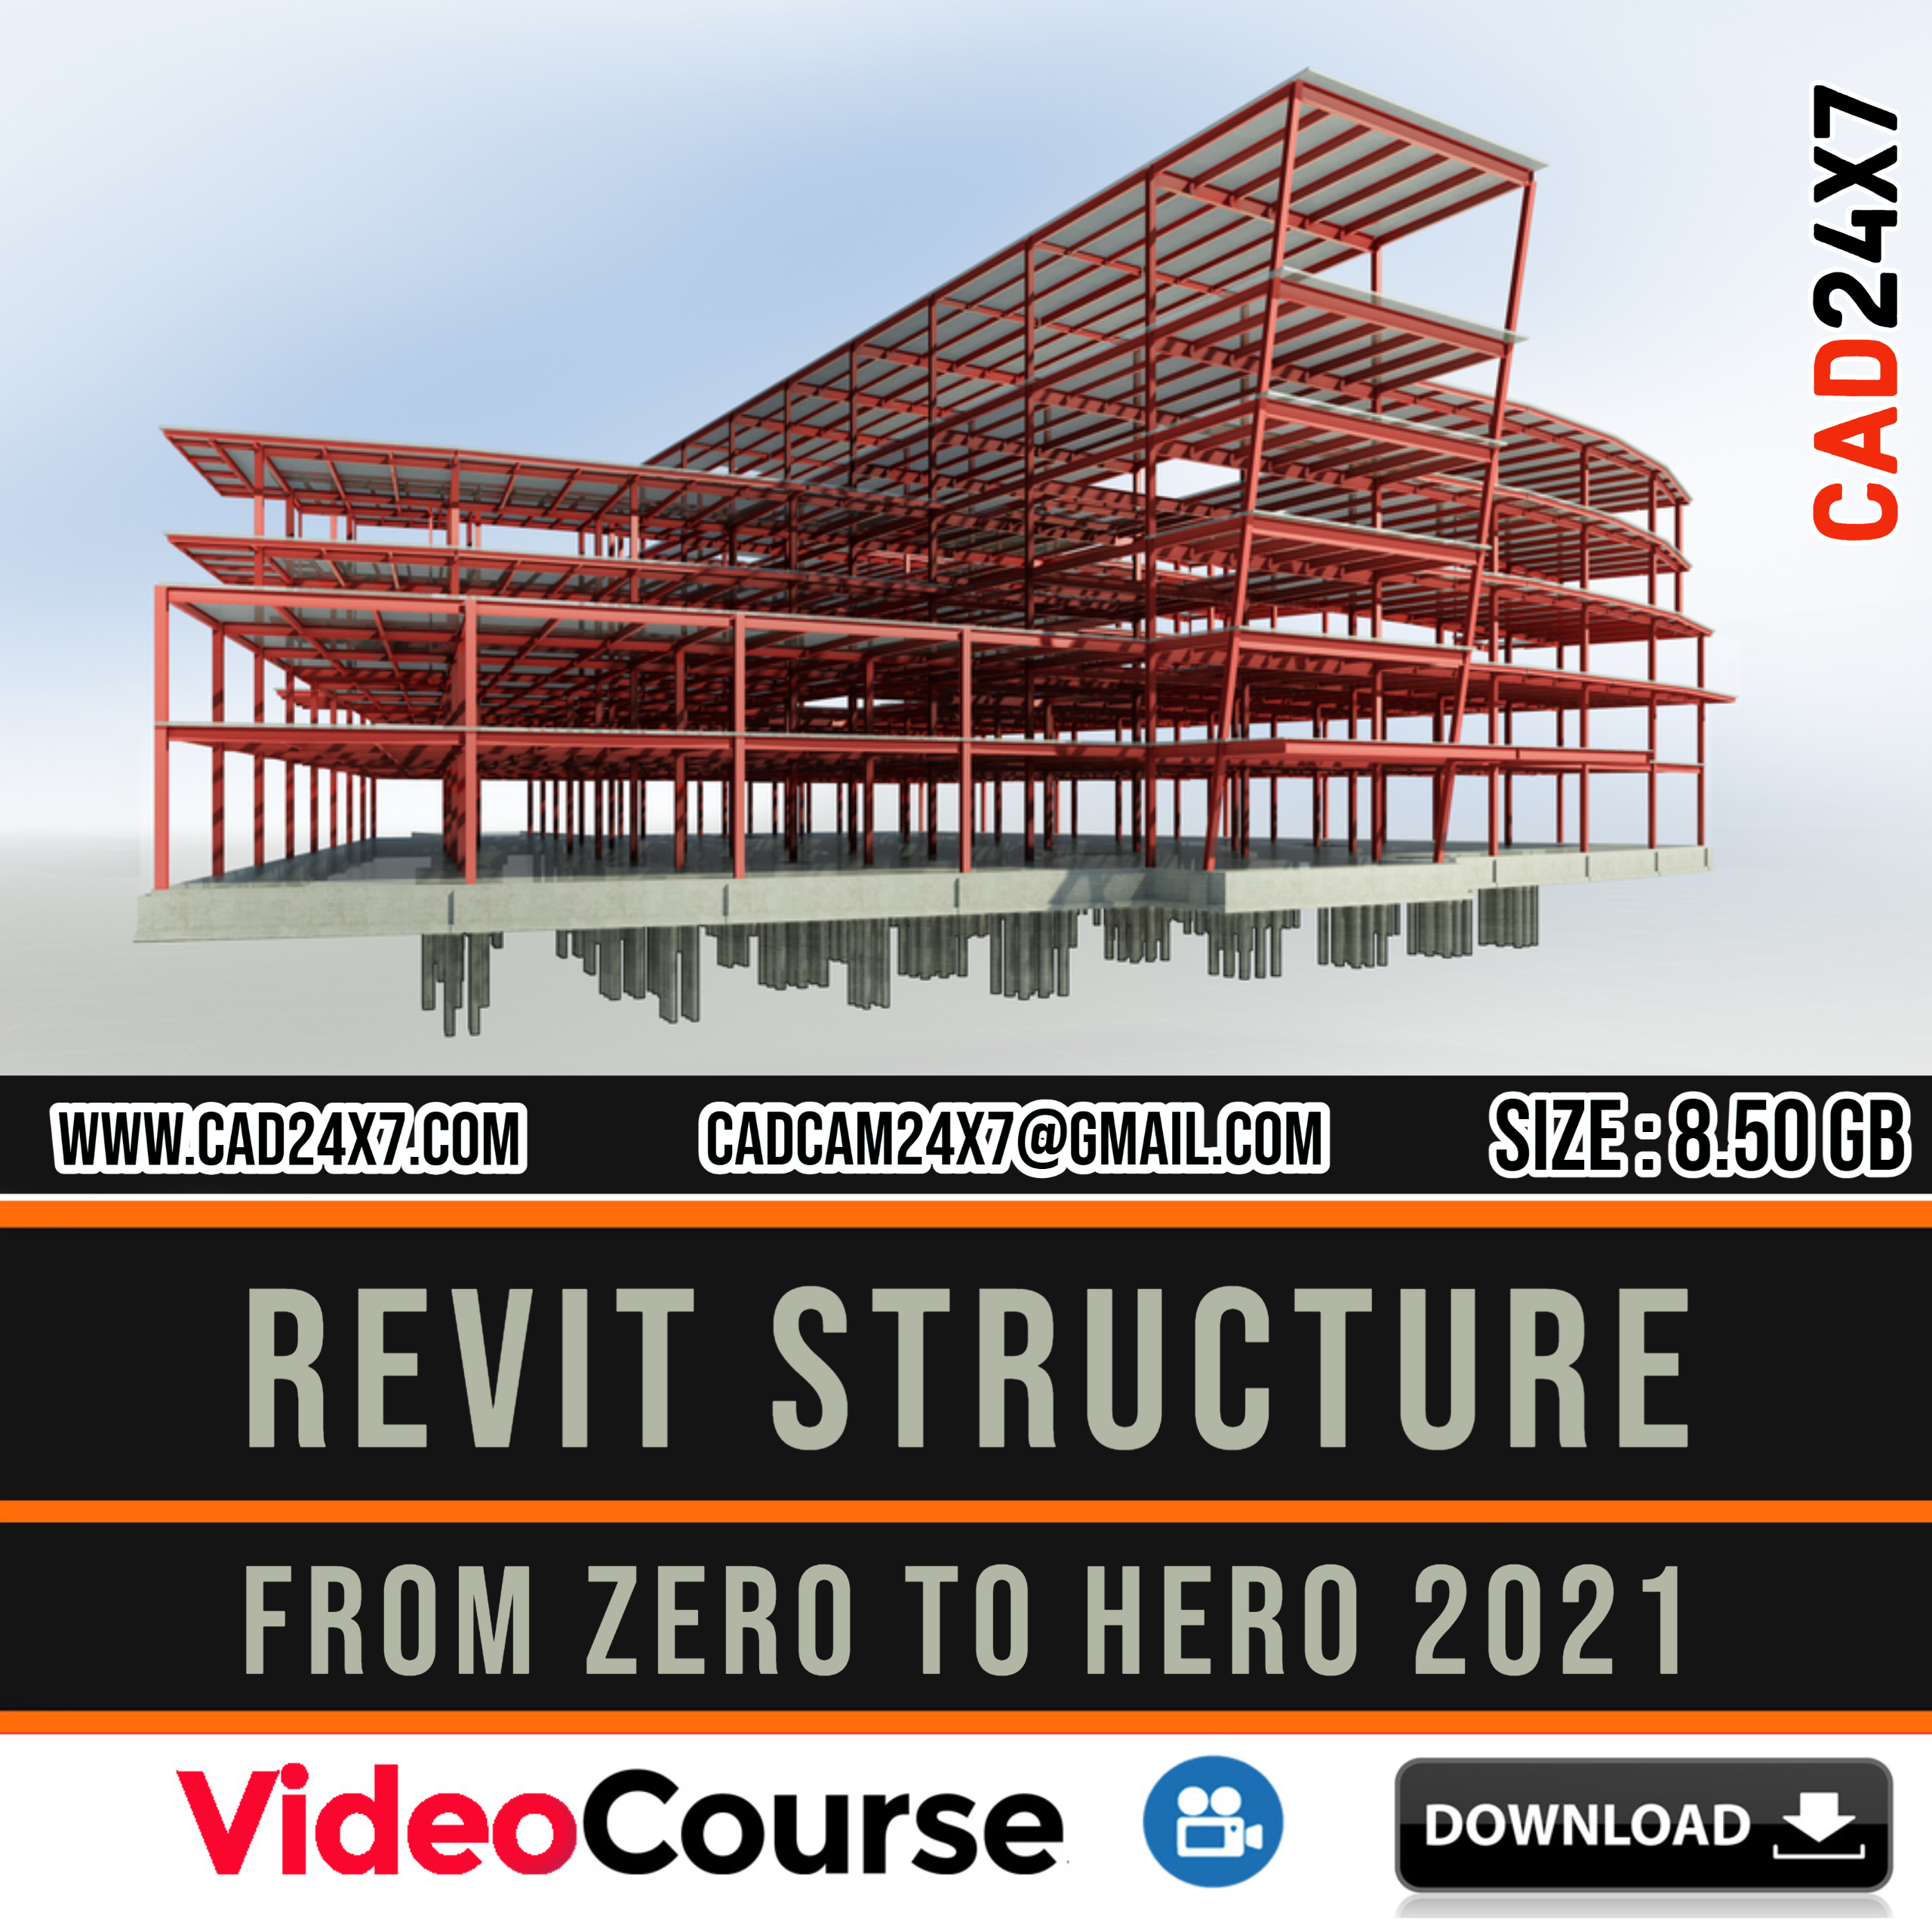 Revit Structure from Zero to Hero 2021